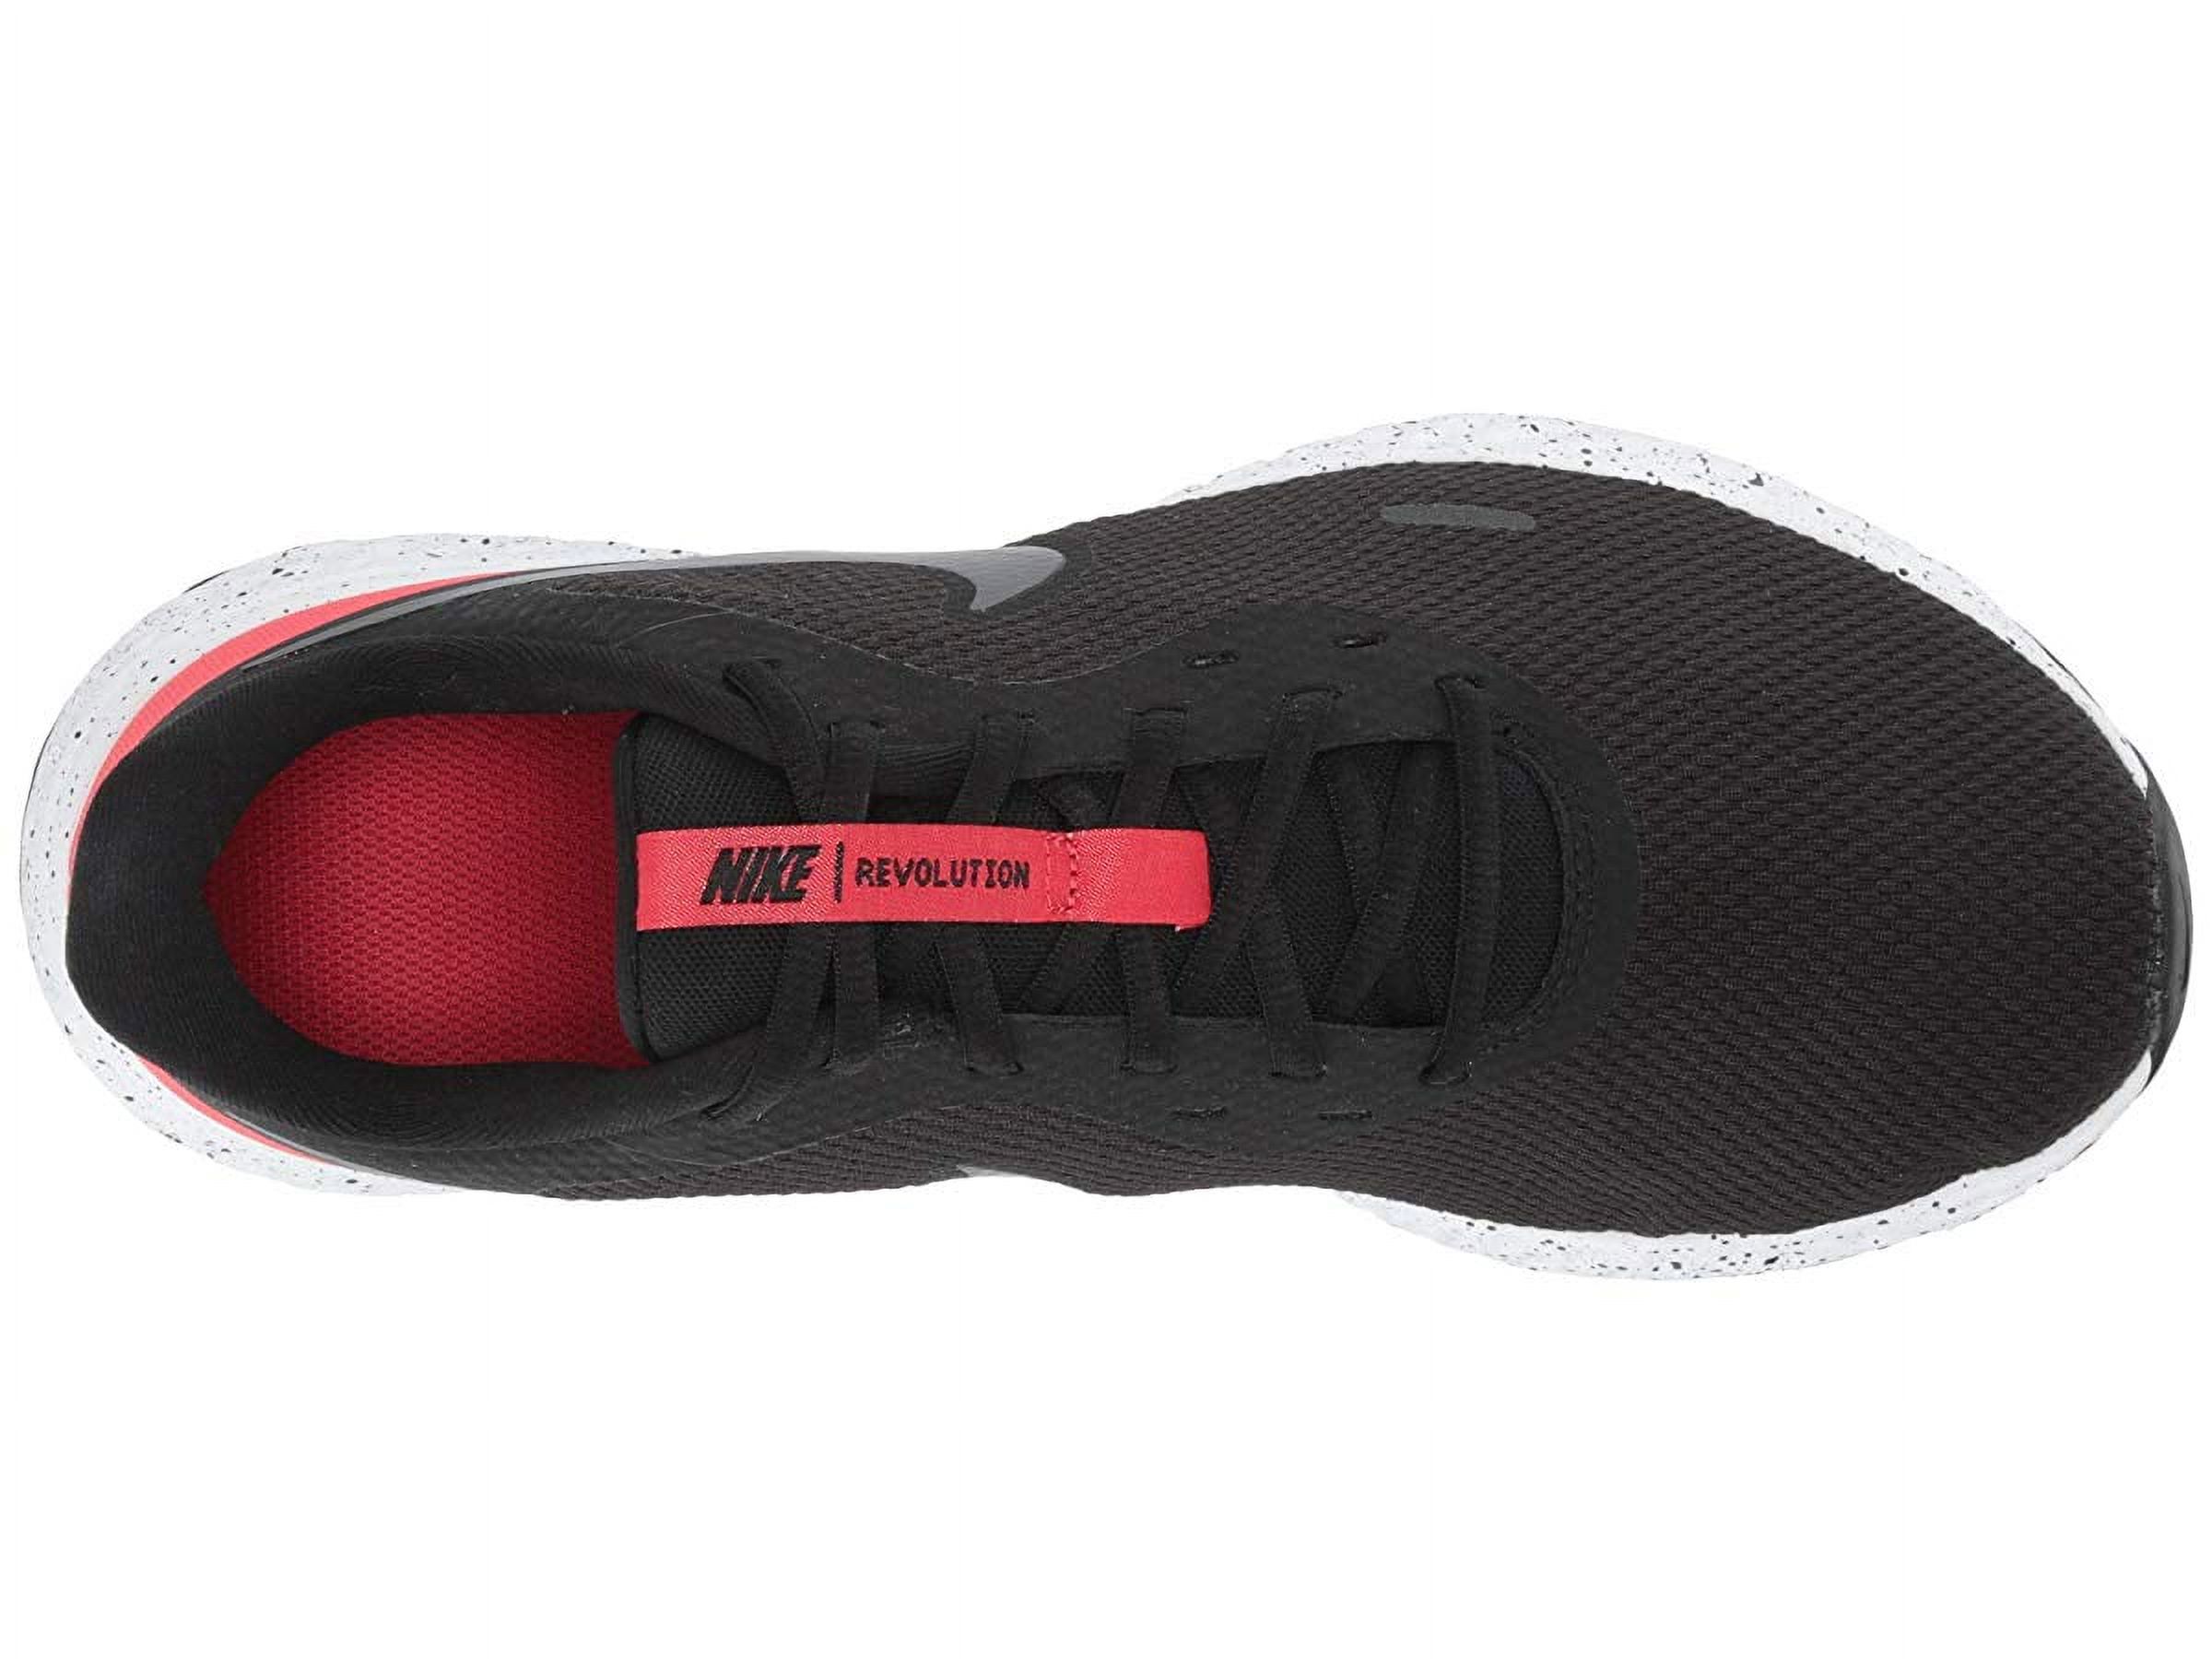 Nike Revolution 5 Black/Anthracite/University Red/White - image 3 of 6